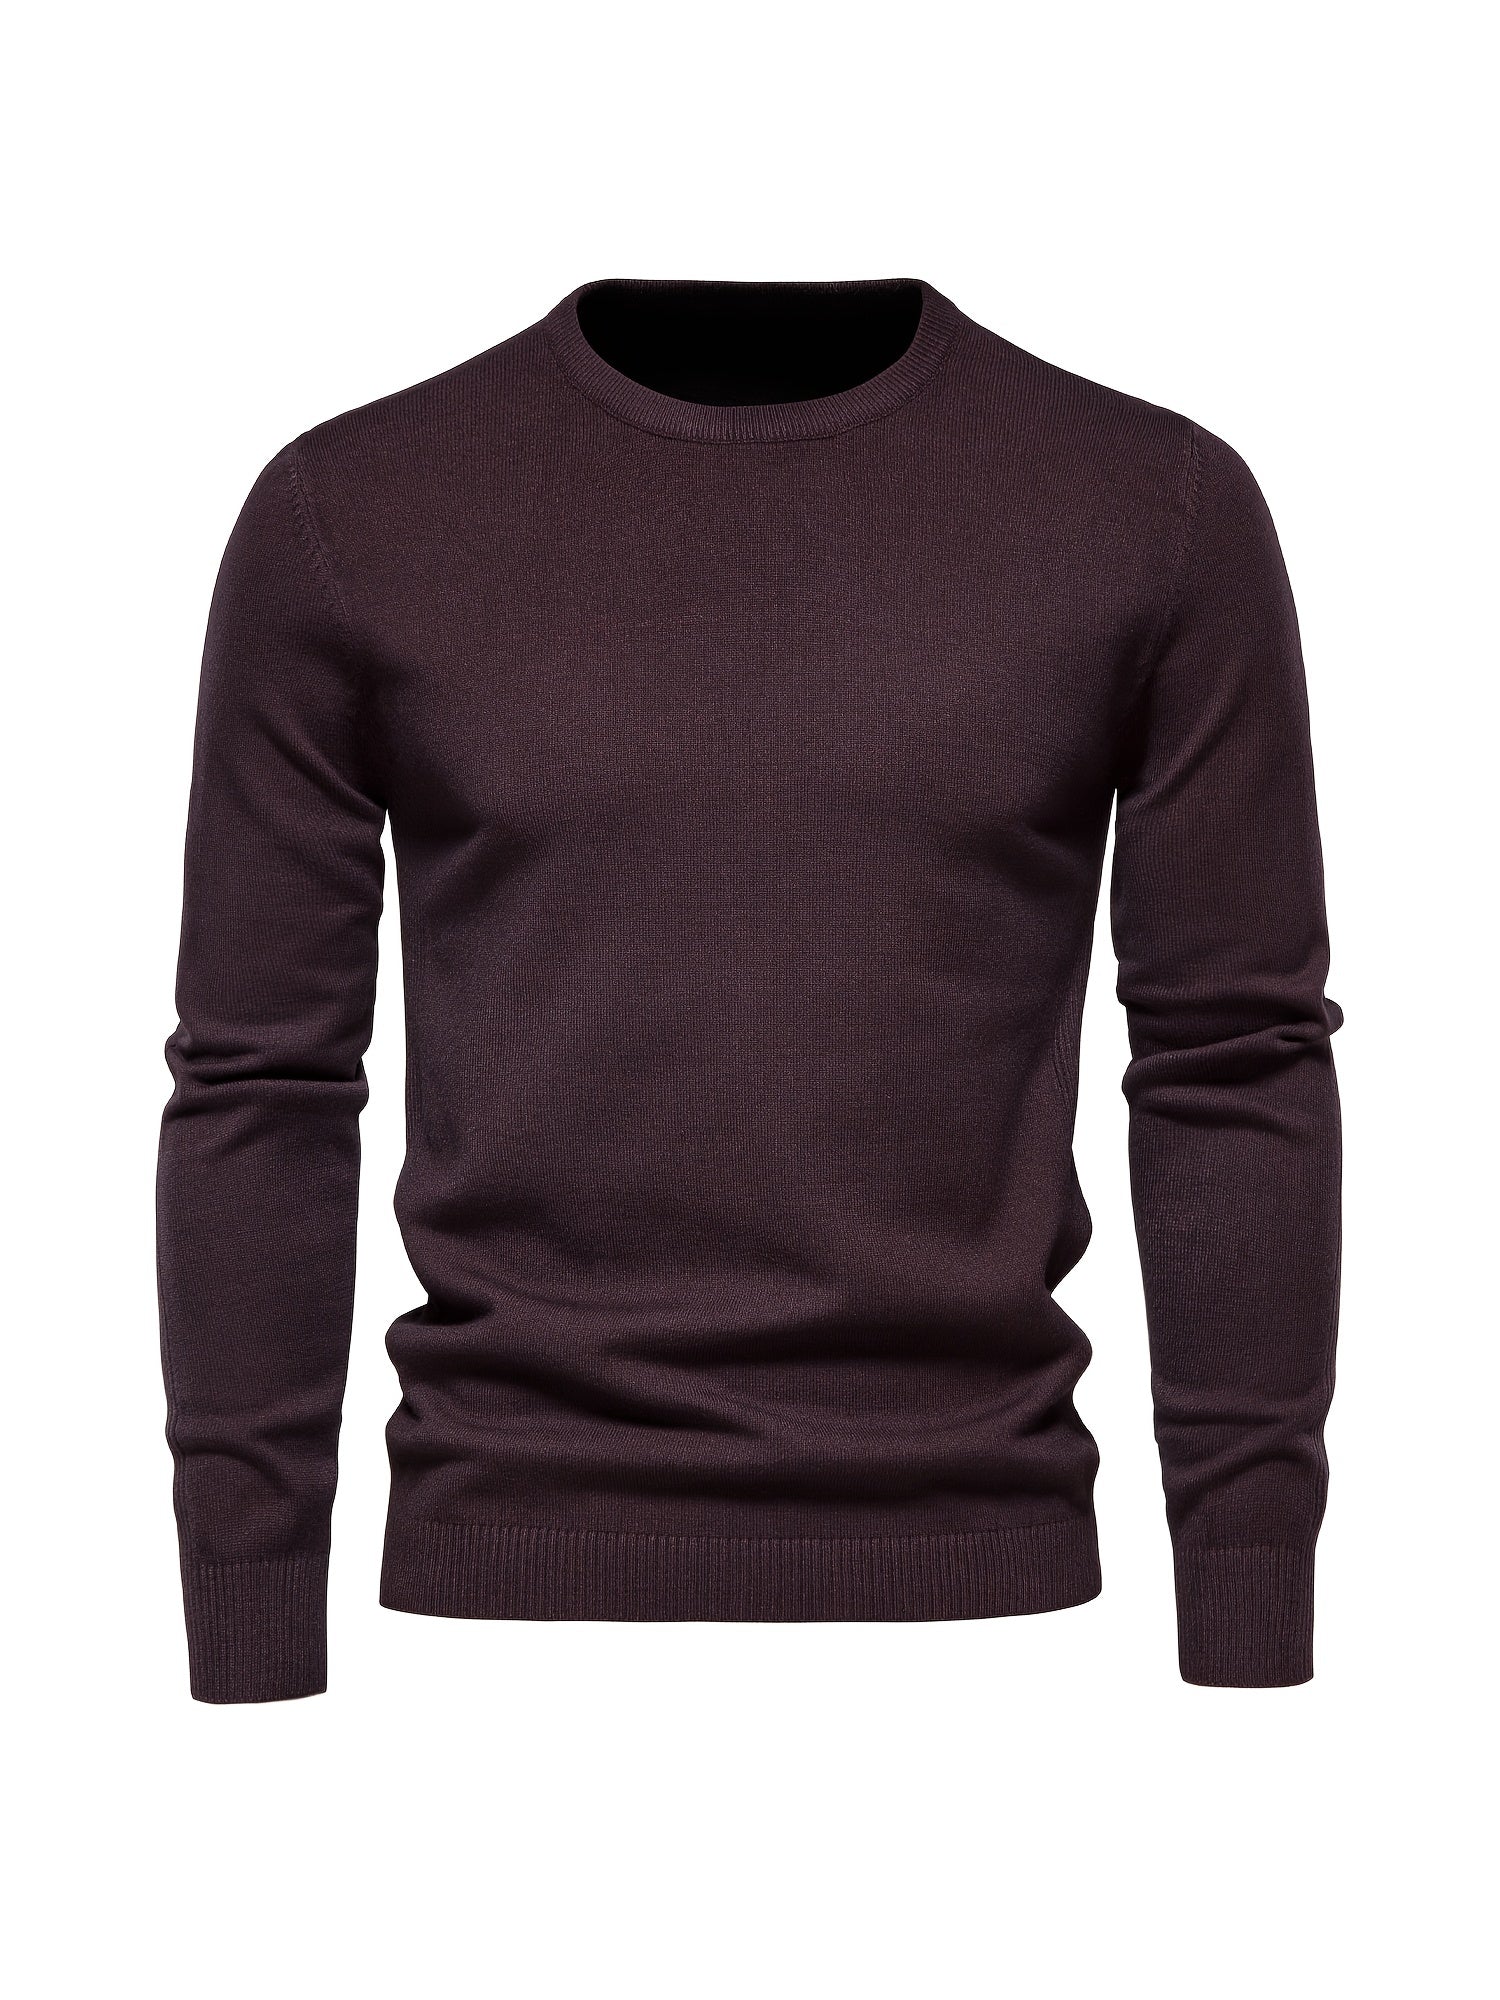 Men's Solid Color Crew Neck Slim Fit Knit Sweater